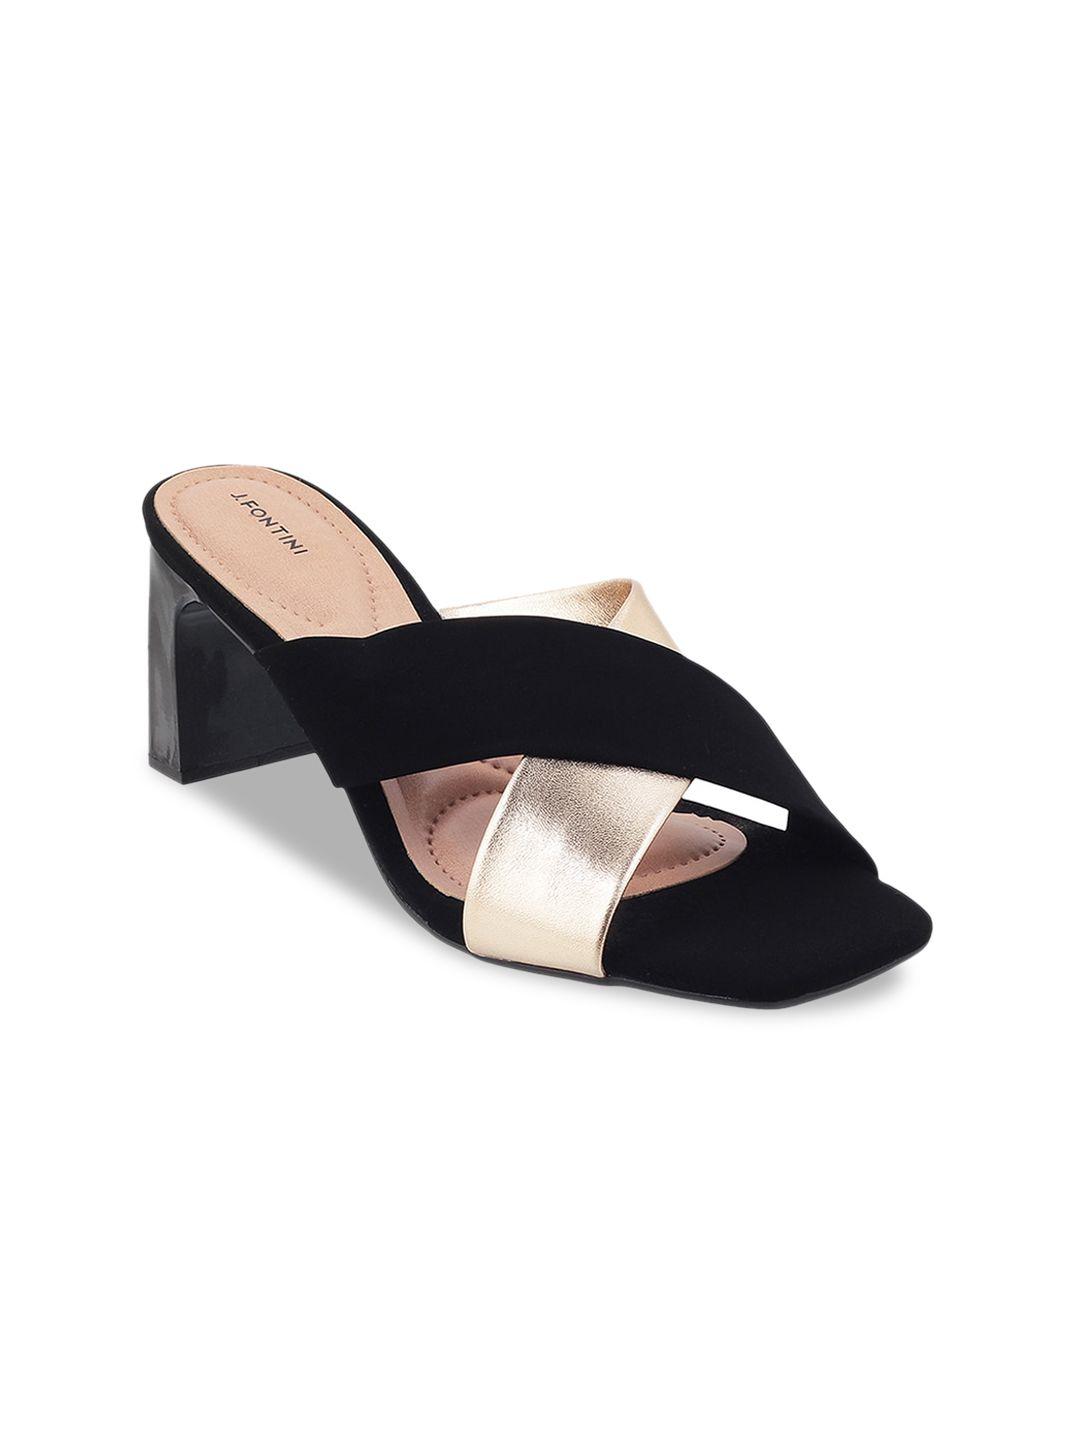 j fontini women black & gold-toned block heels